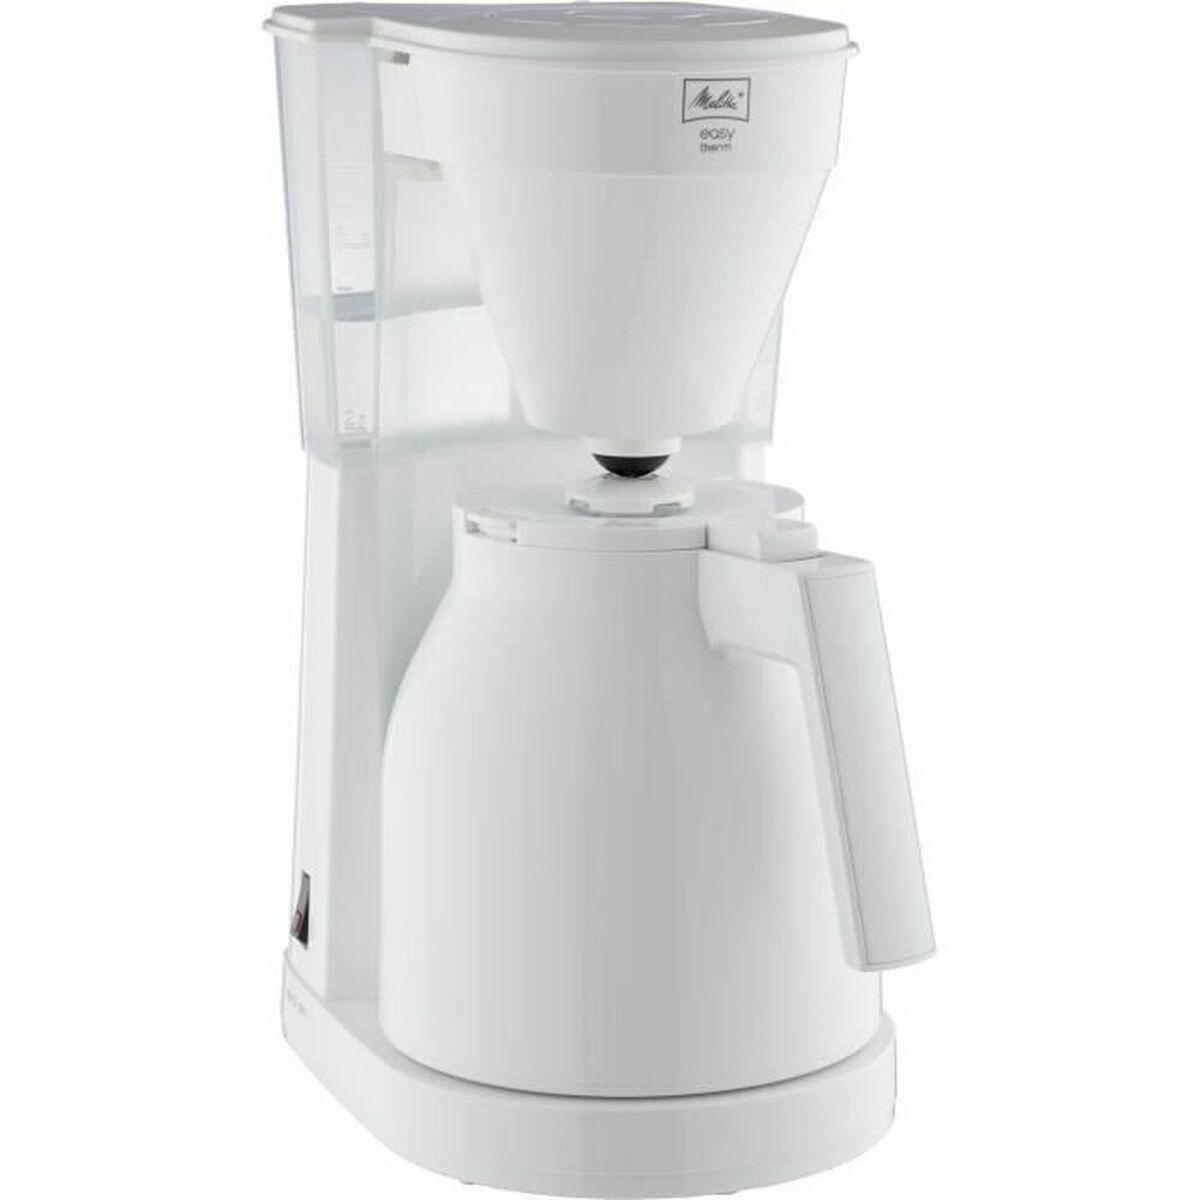 Filterkaffeemaschine Melitta 1023-05 1050 W - CA International 